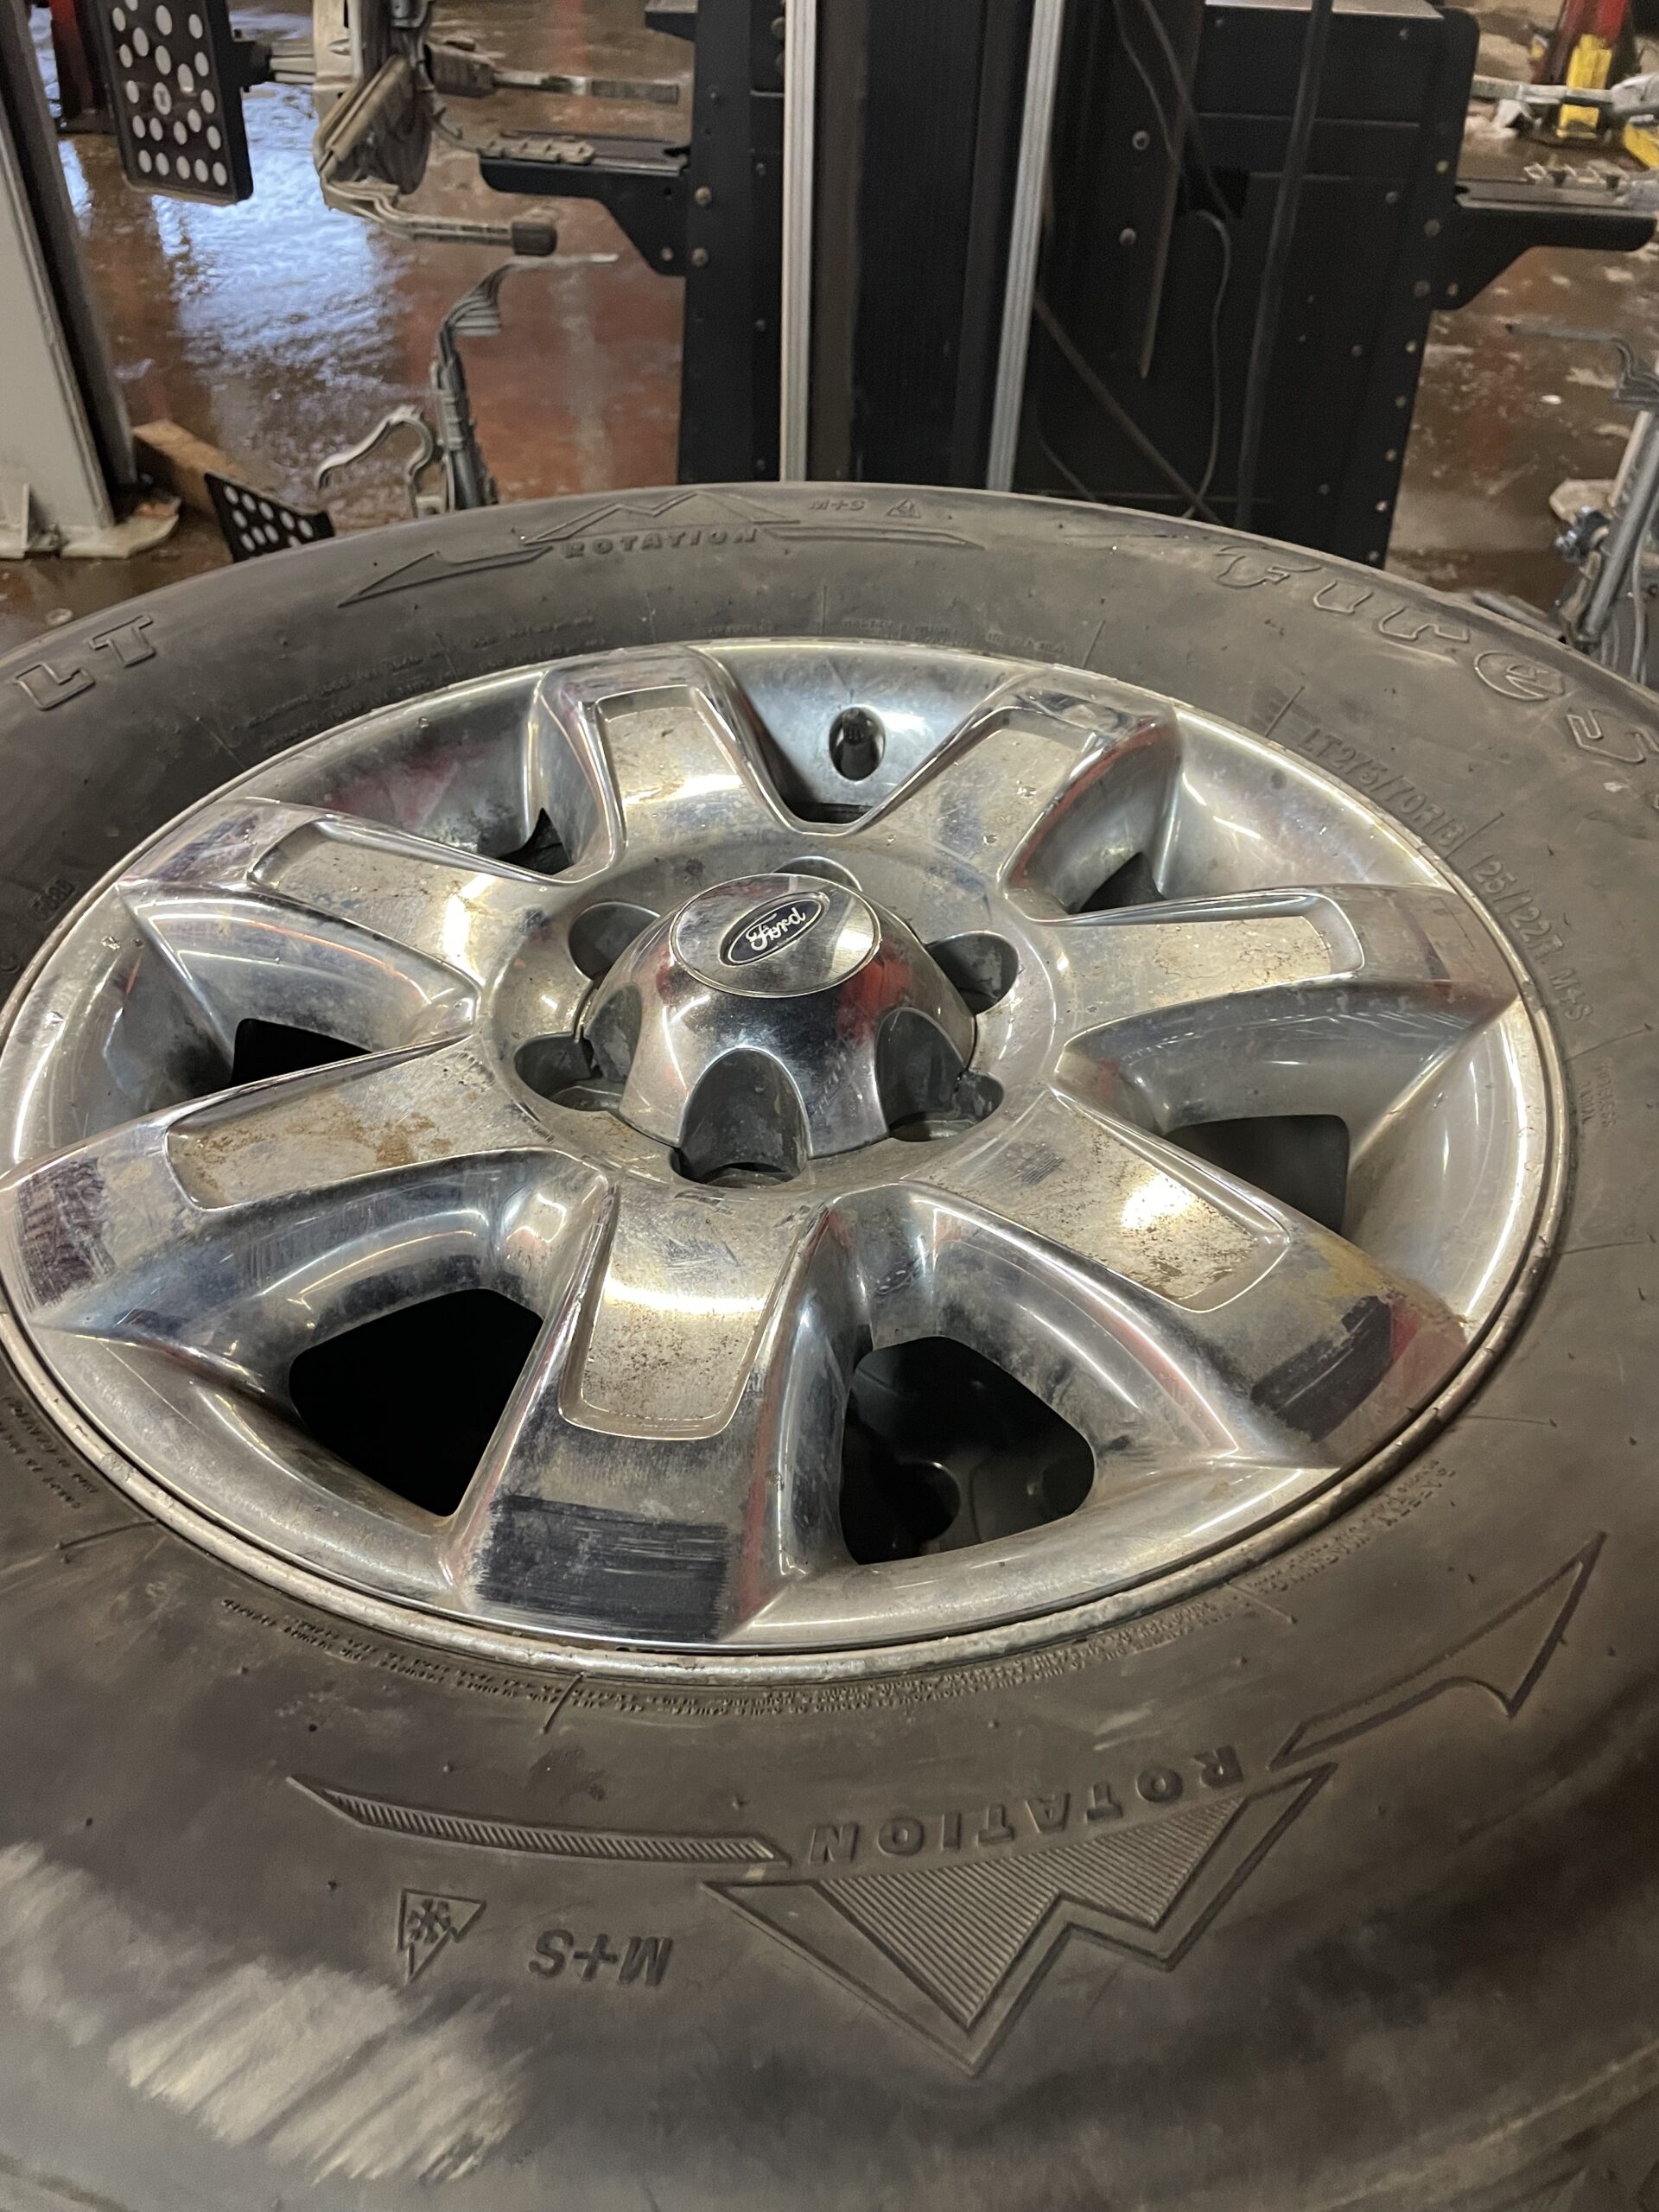 275/70r18 Firestone snow tires on ford f150 rims